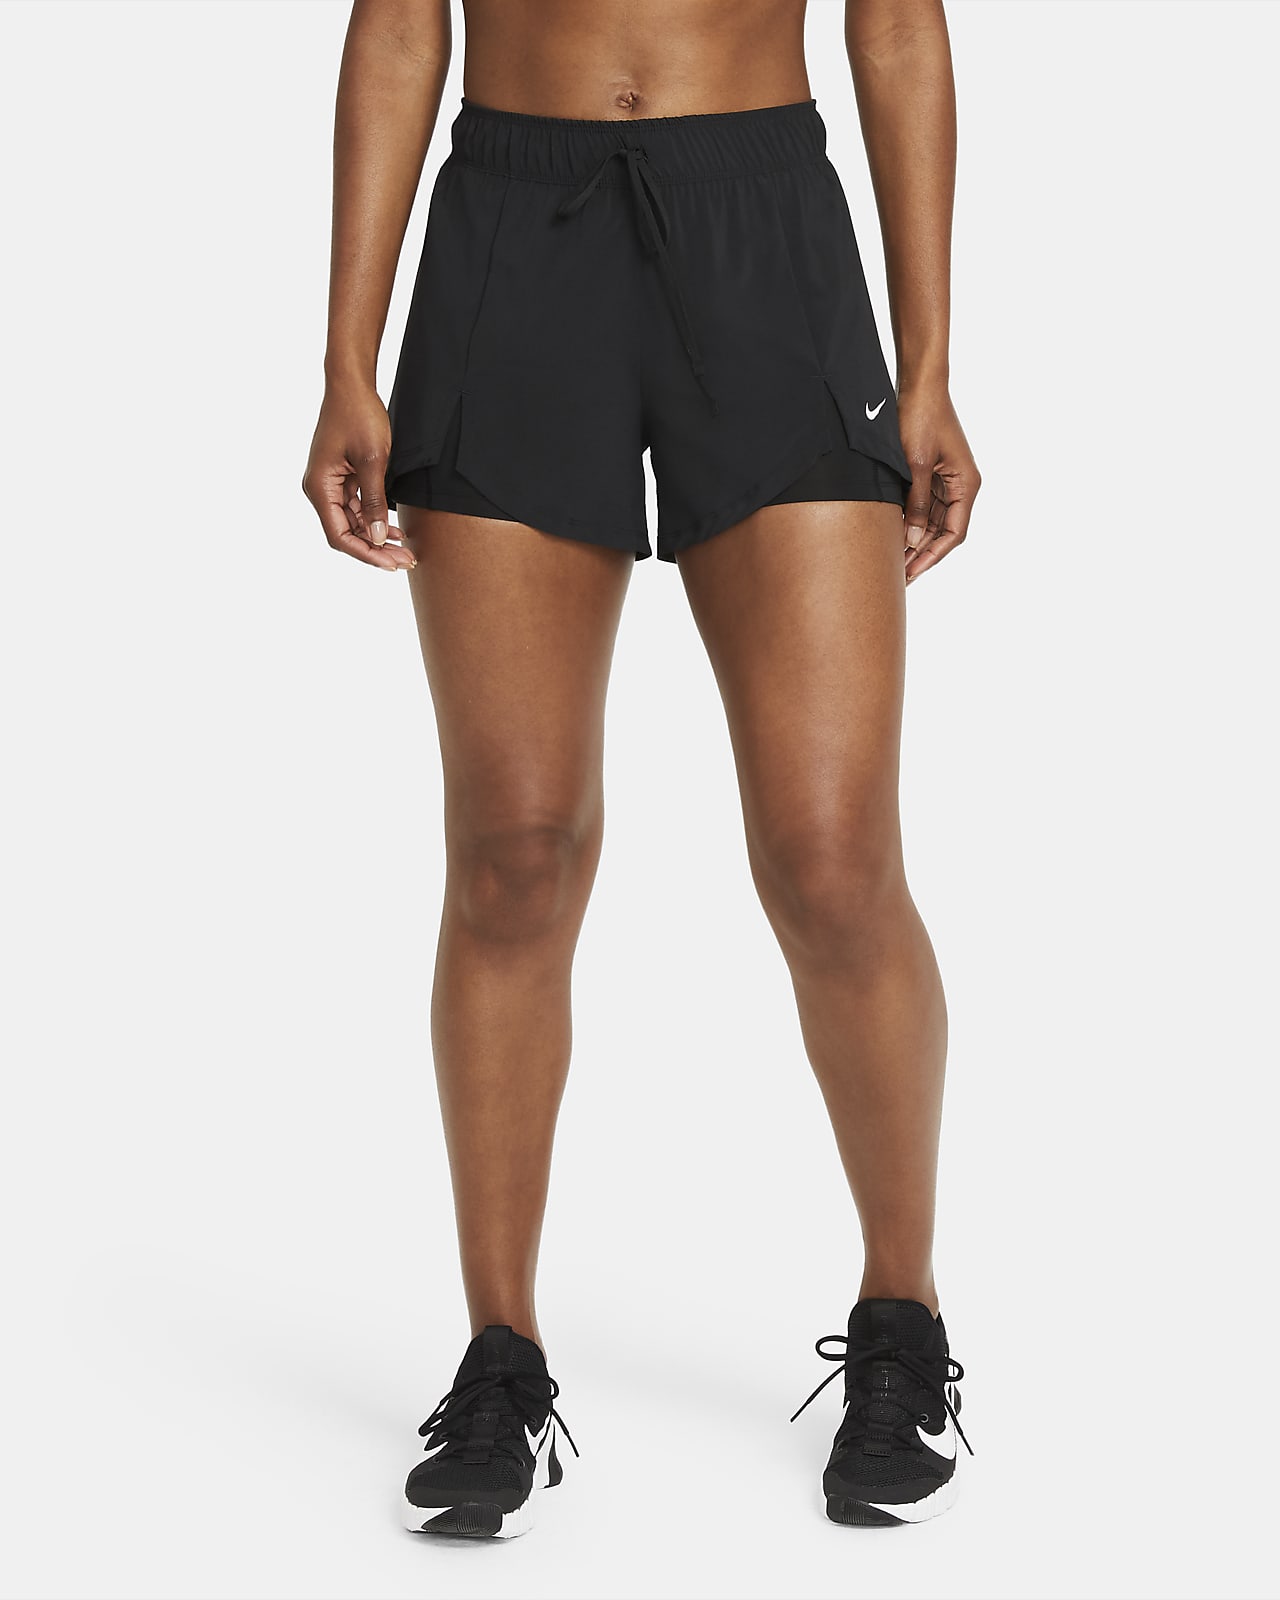 Nike Flex Essential 2-in-1 Pantalons curts d'entrenament - Dona